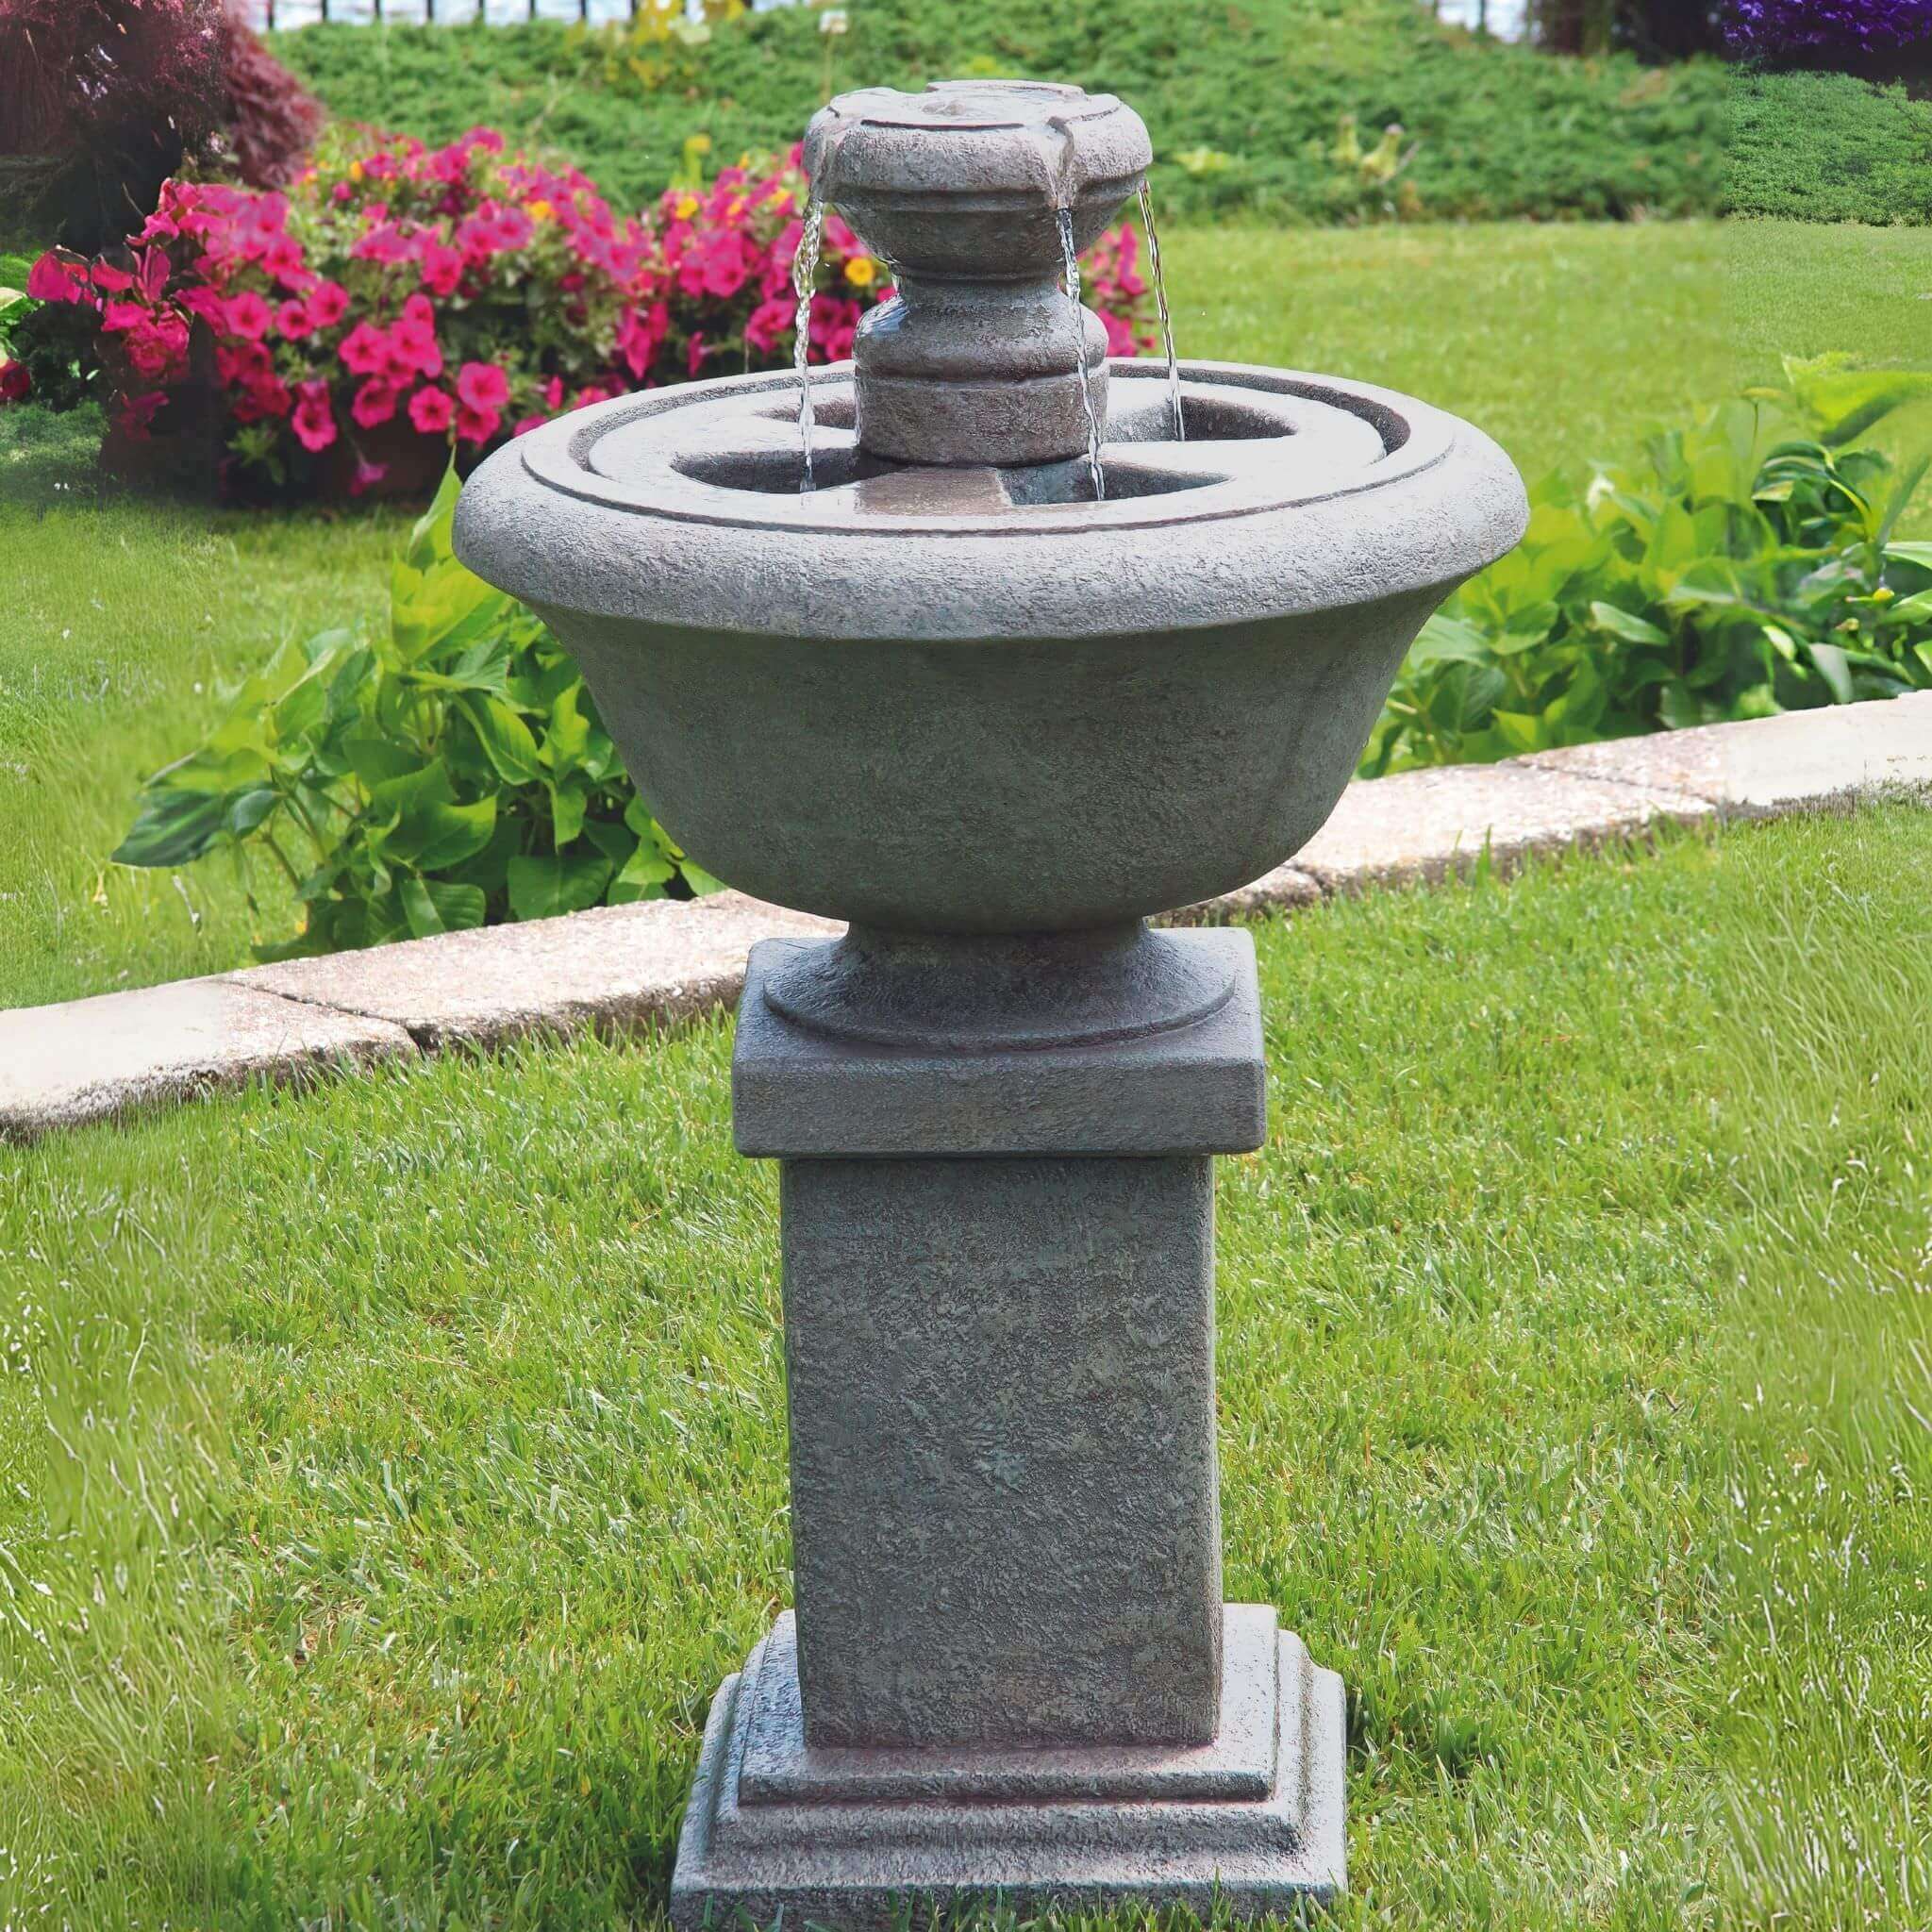  Cheshire 2-Tier Concrete Pedestal Fountain w/Lights - Massarellis #3570